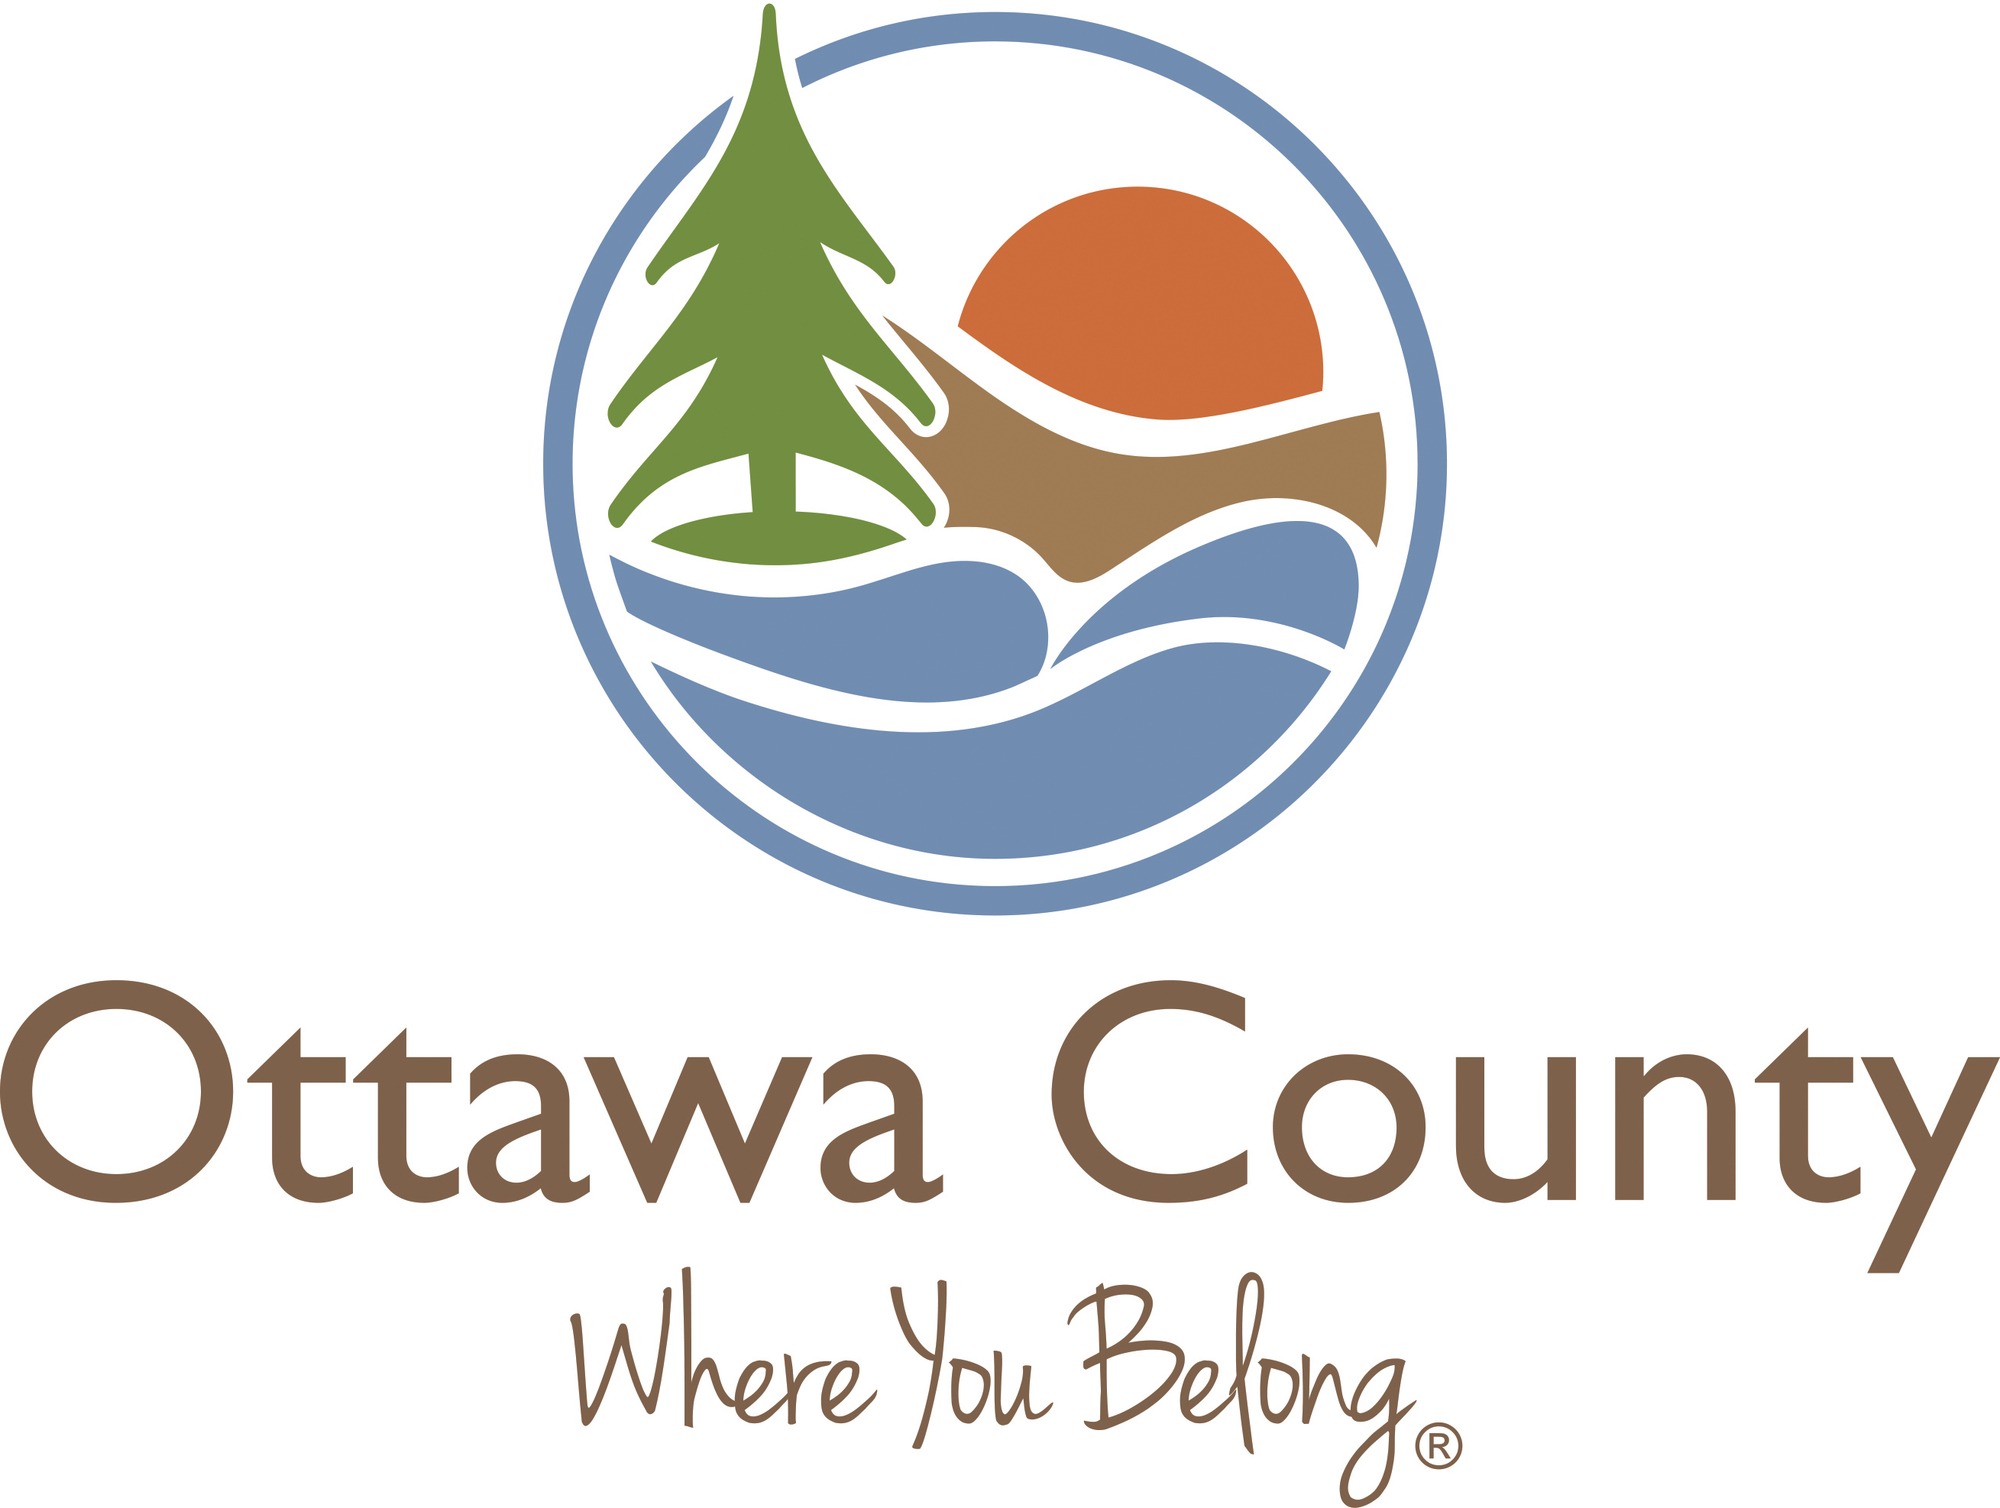 Ottawa County Logo